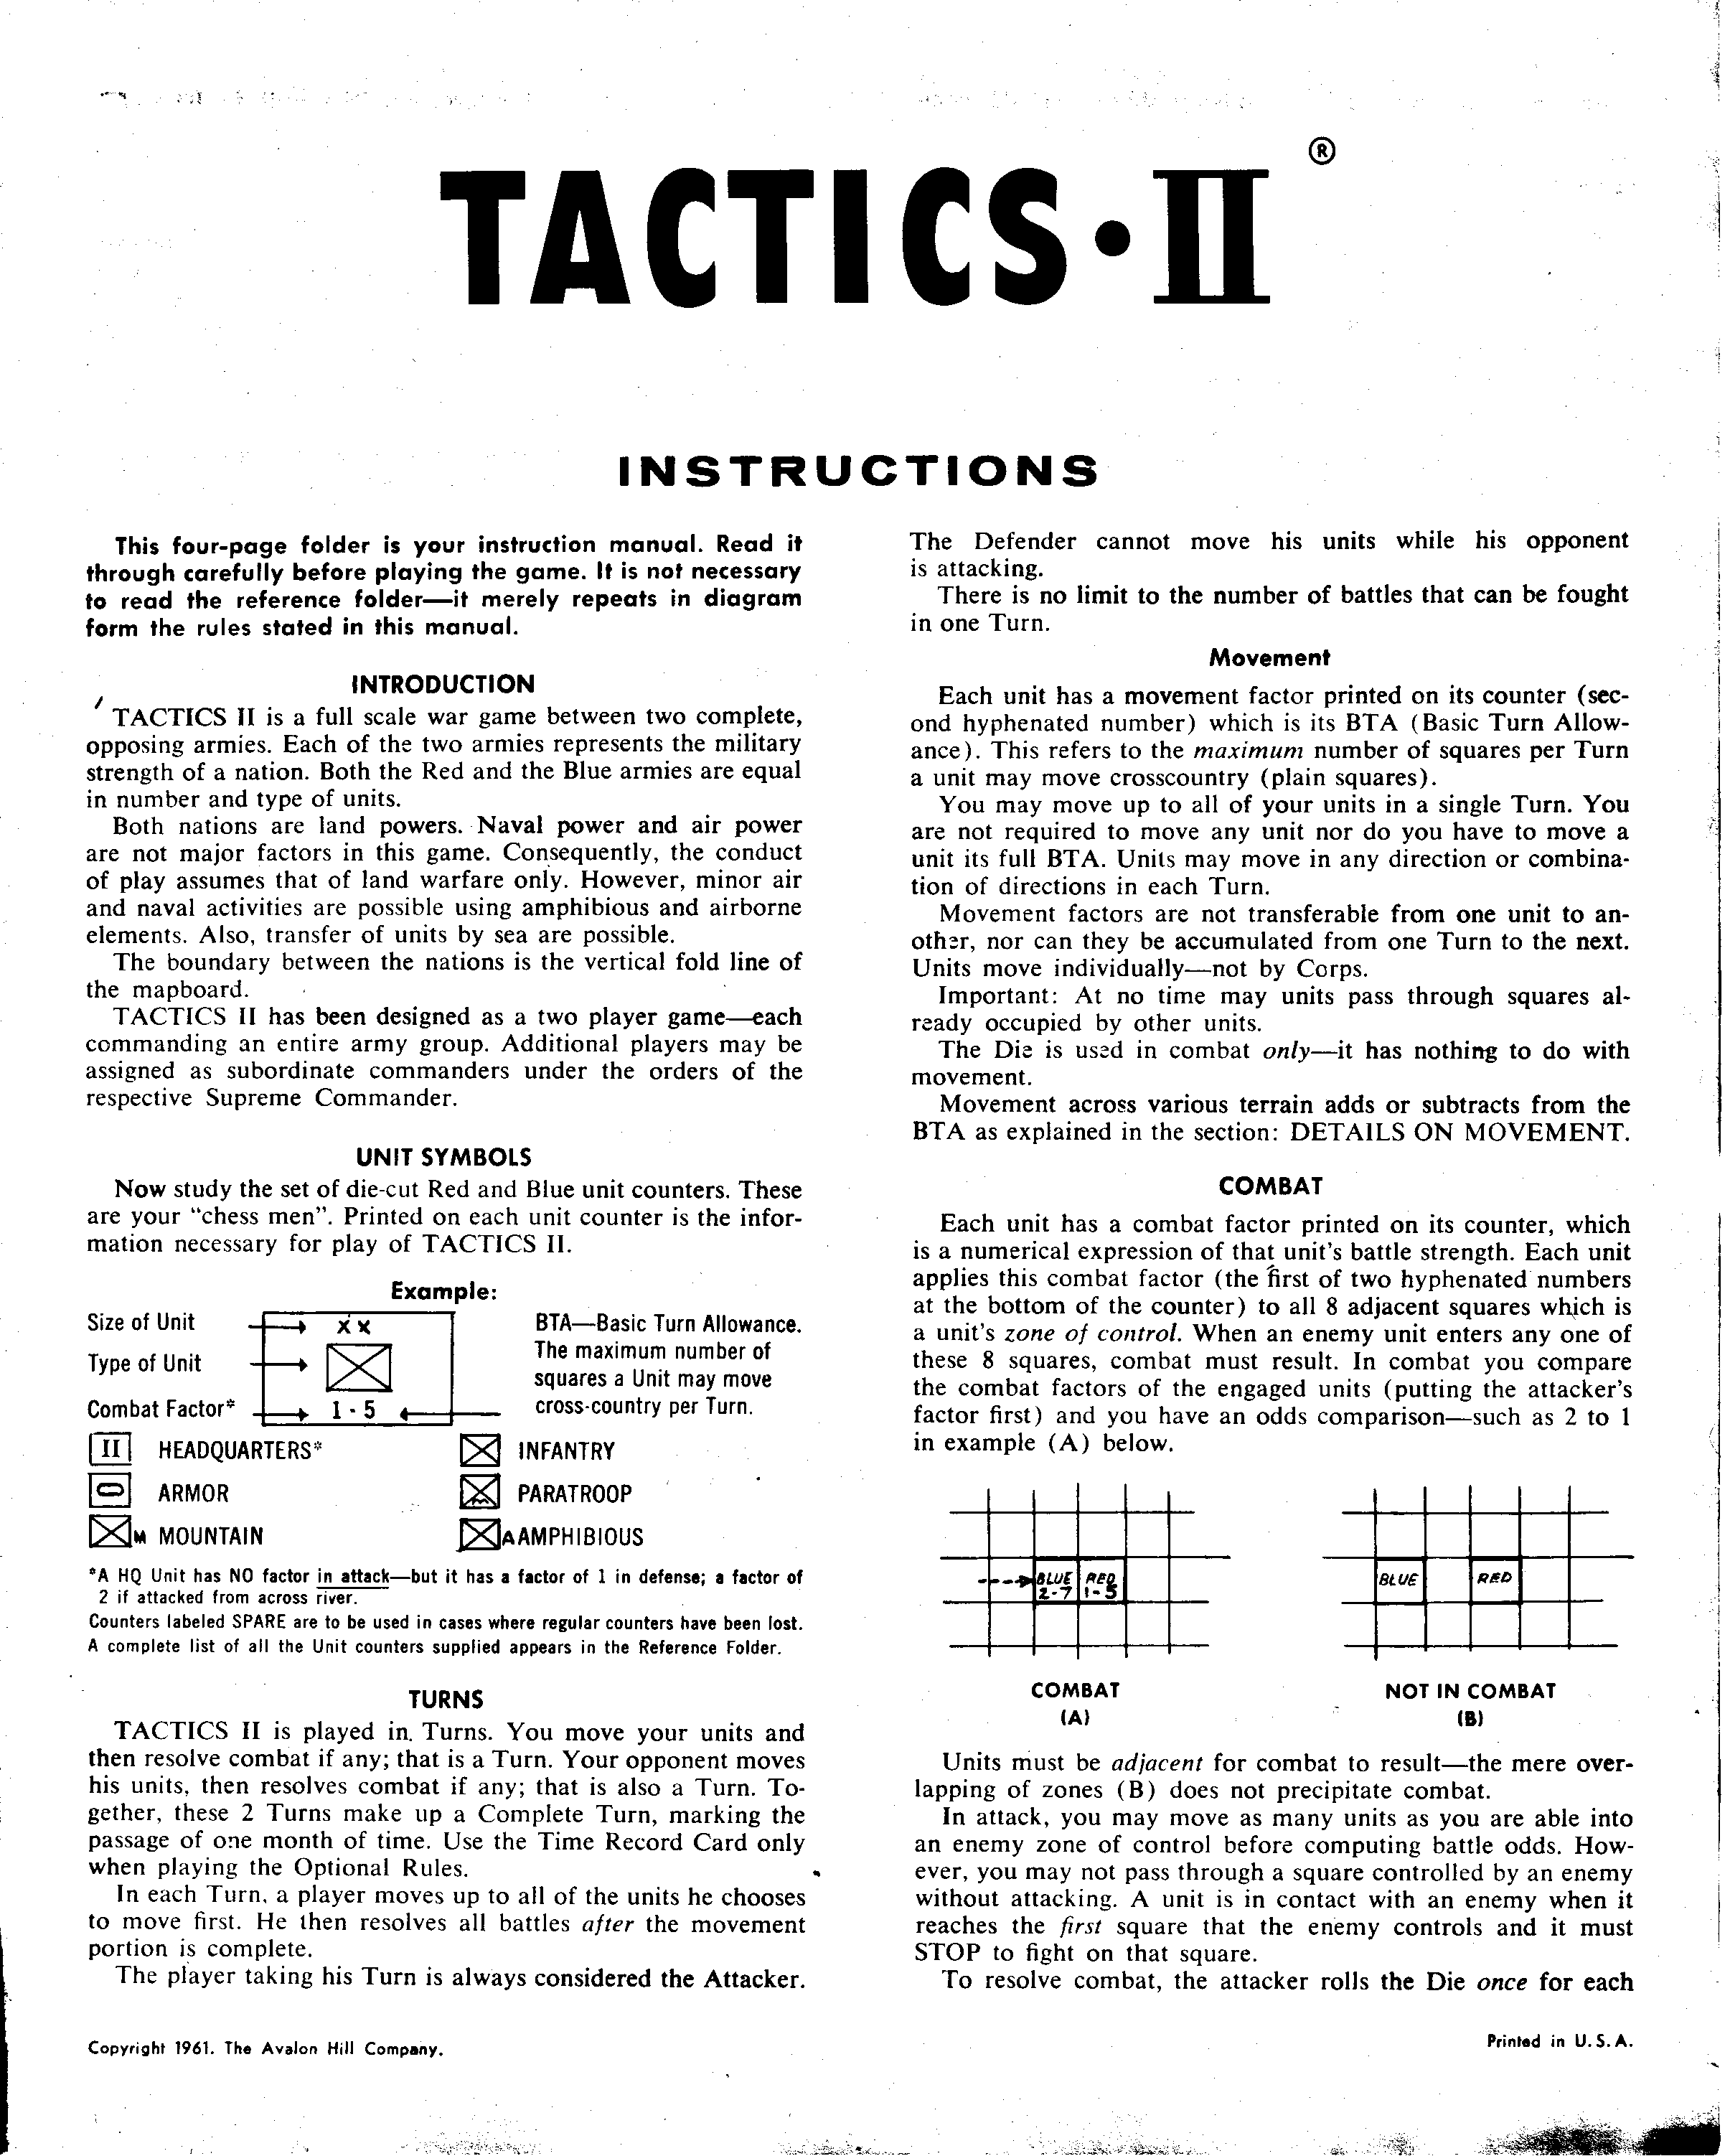 Tactics II的规则只有几页，并不复杂。可以看到算子采用了简单的战斗值